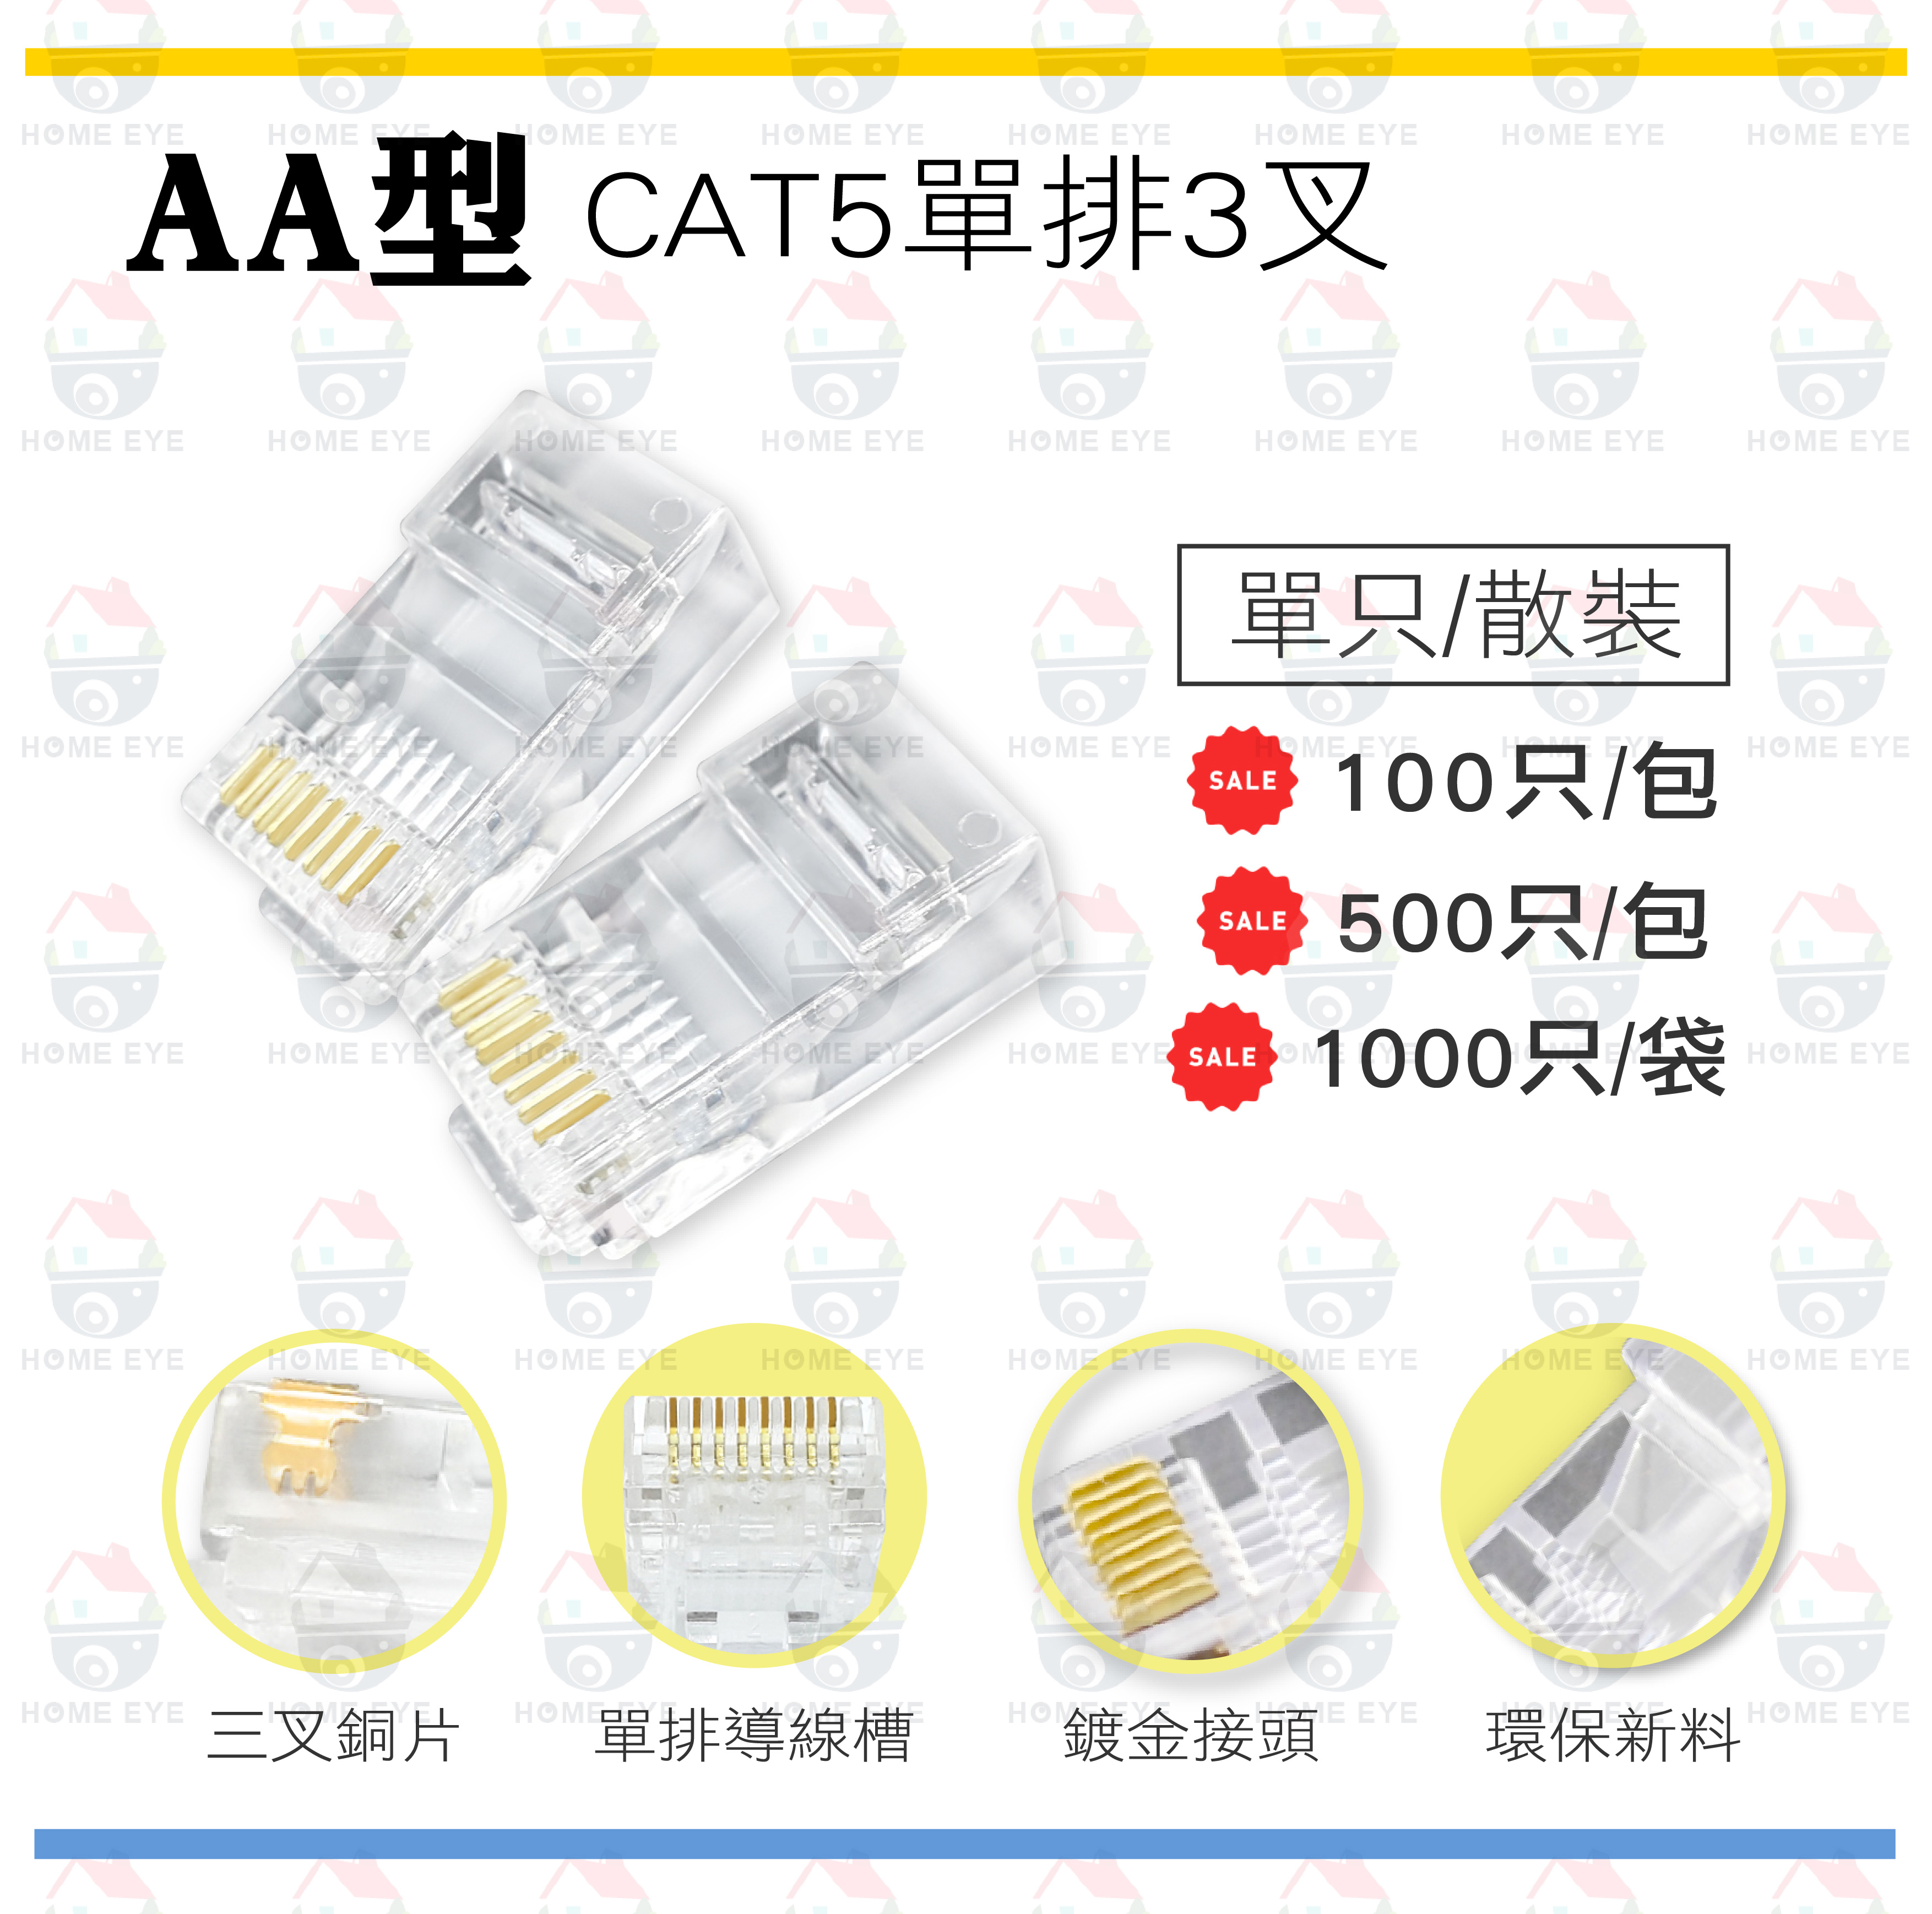  CAT5 網路水晶頭 ★三叉銅片★單排導線槽